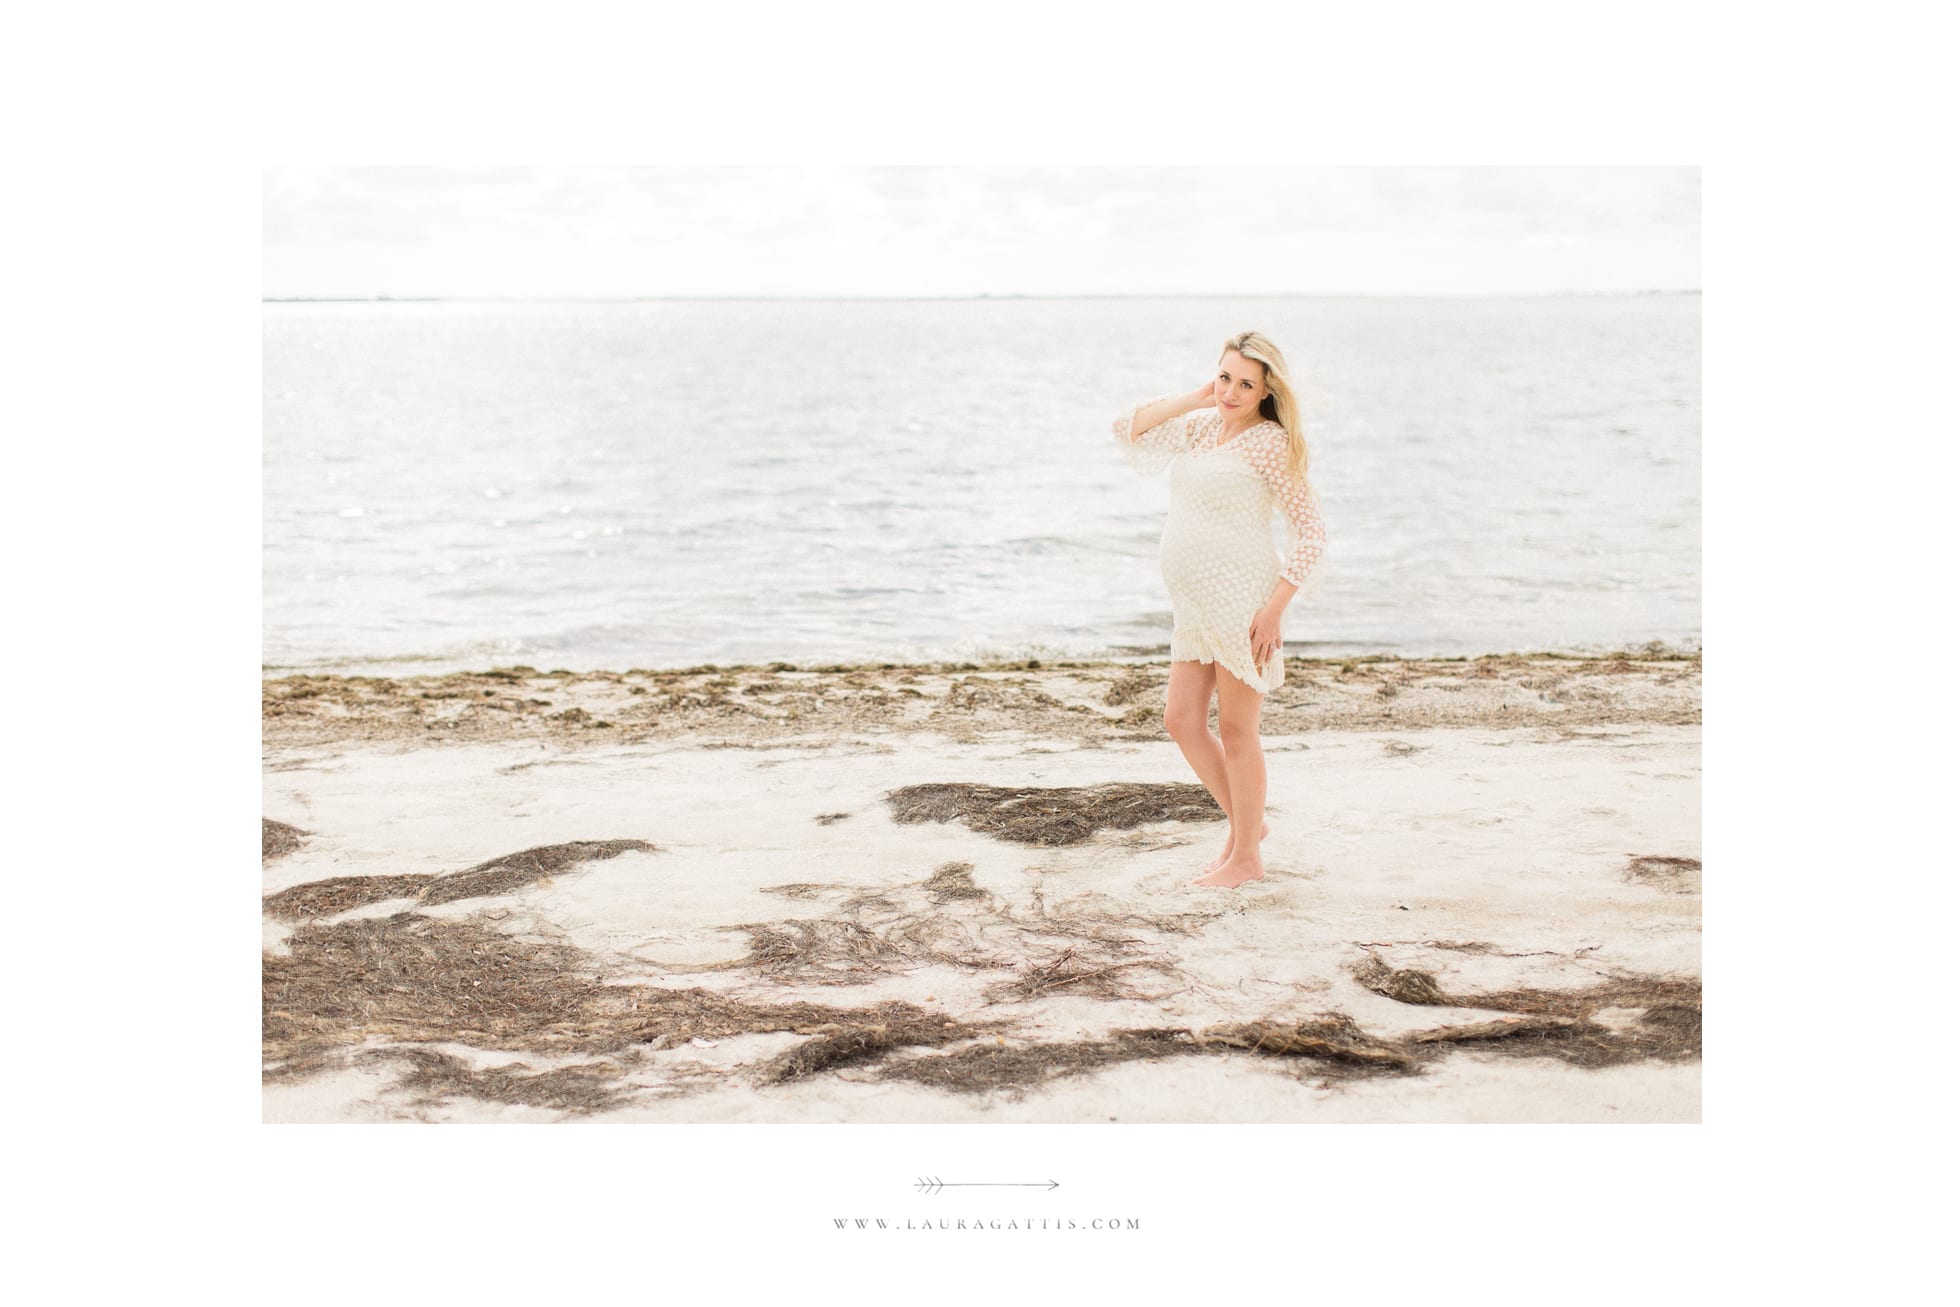 natural beach maternity photography | laura gattis photography